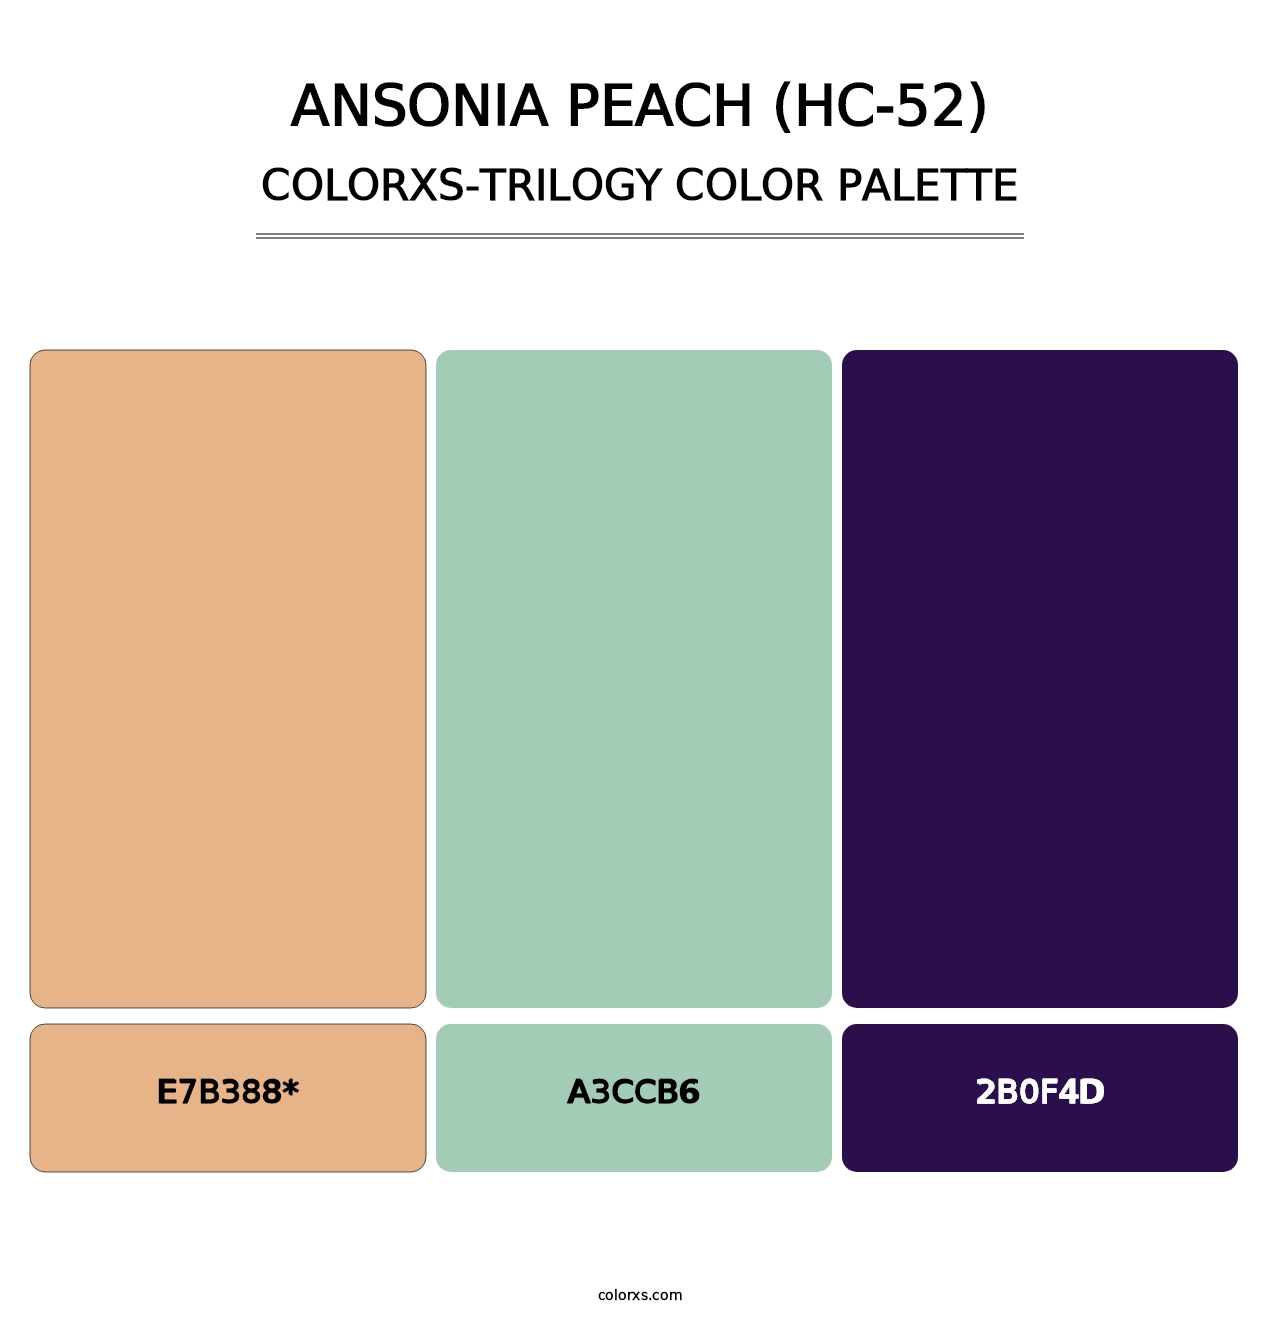 Ansonia Peach (HC-52) - Colorxs Trilogy Palette